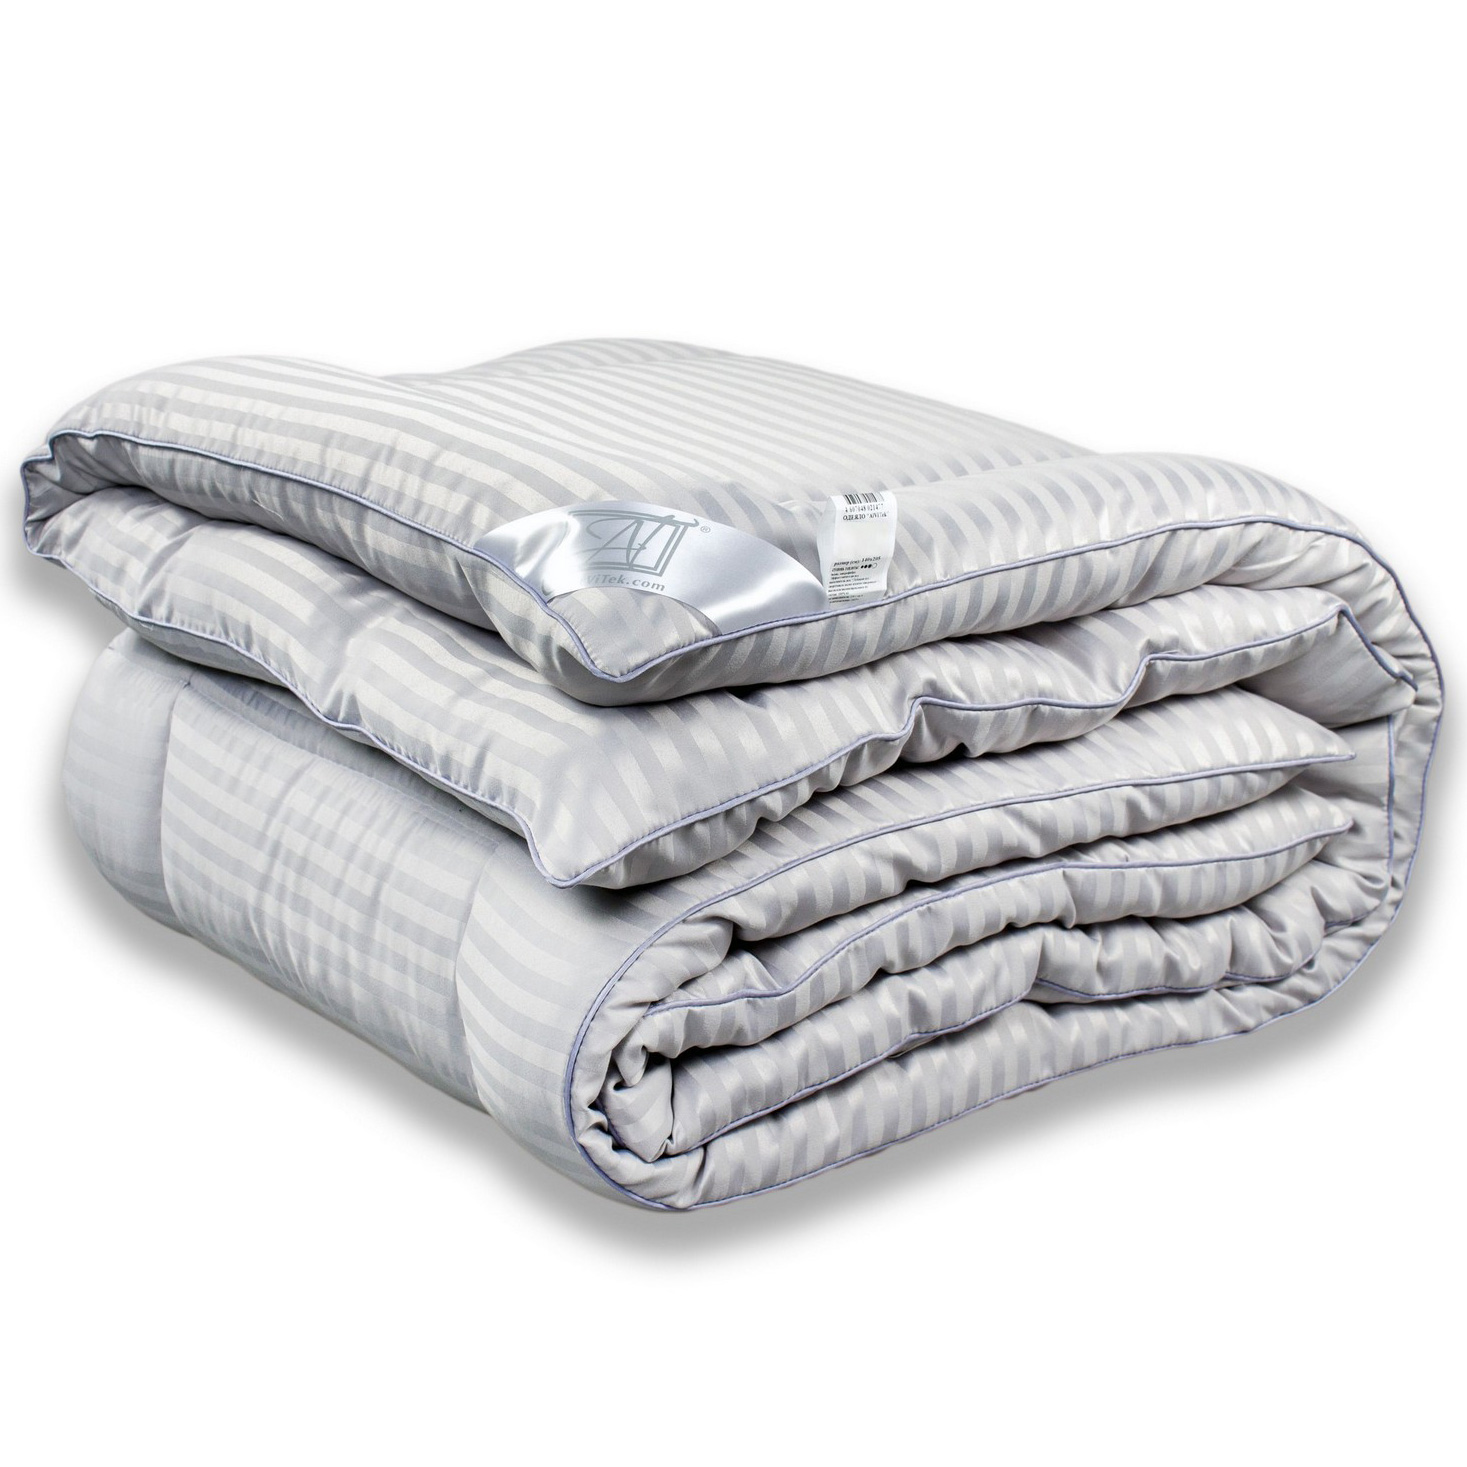 Одеяло Мавис цвет: жемчужно-серый (200х220 см), размер 200х220 см avt953590 Одеяло Мавис цвет: жемчужно-серый (200х220 см) - фото 1